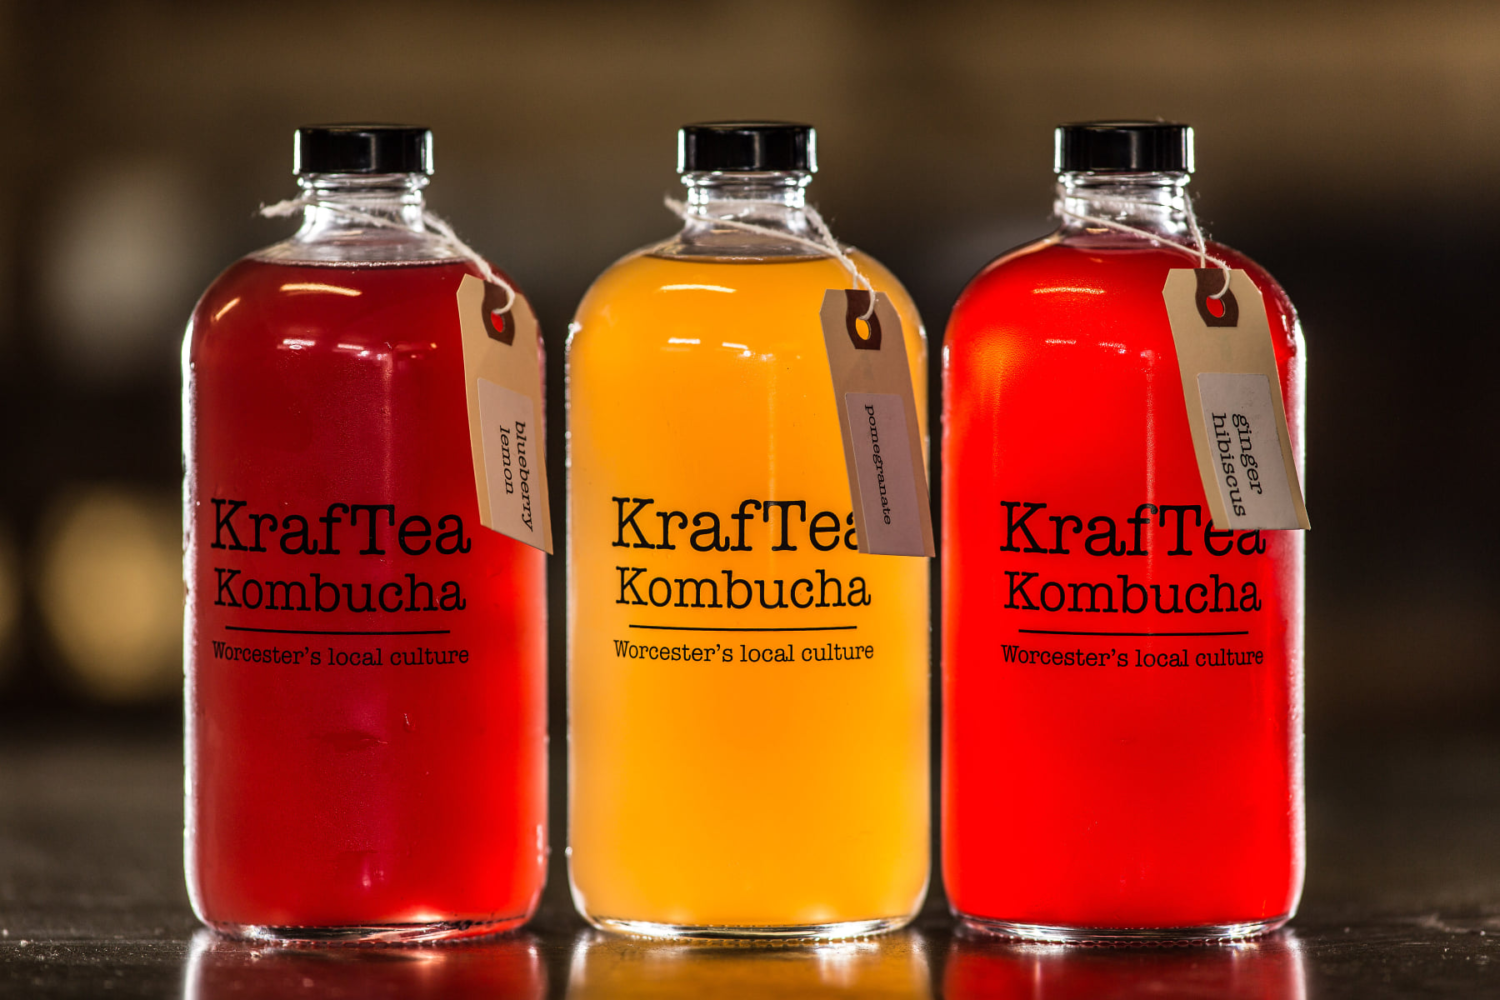 bottles of KrafTea Kombucha